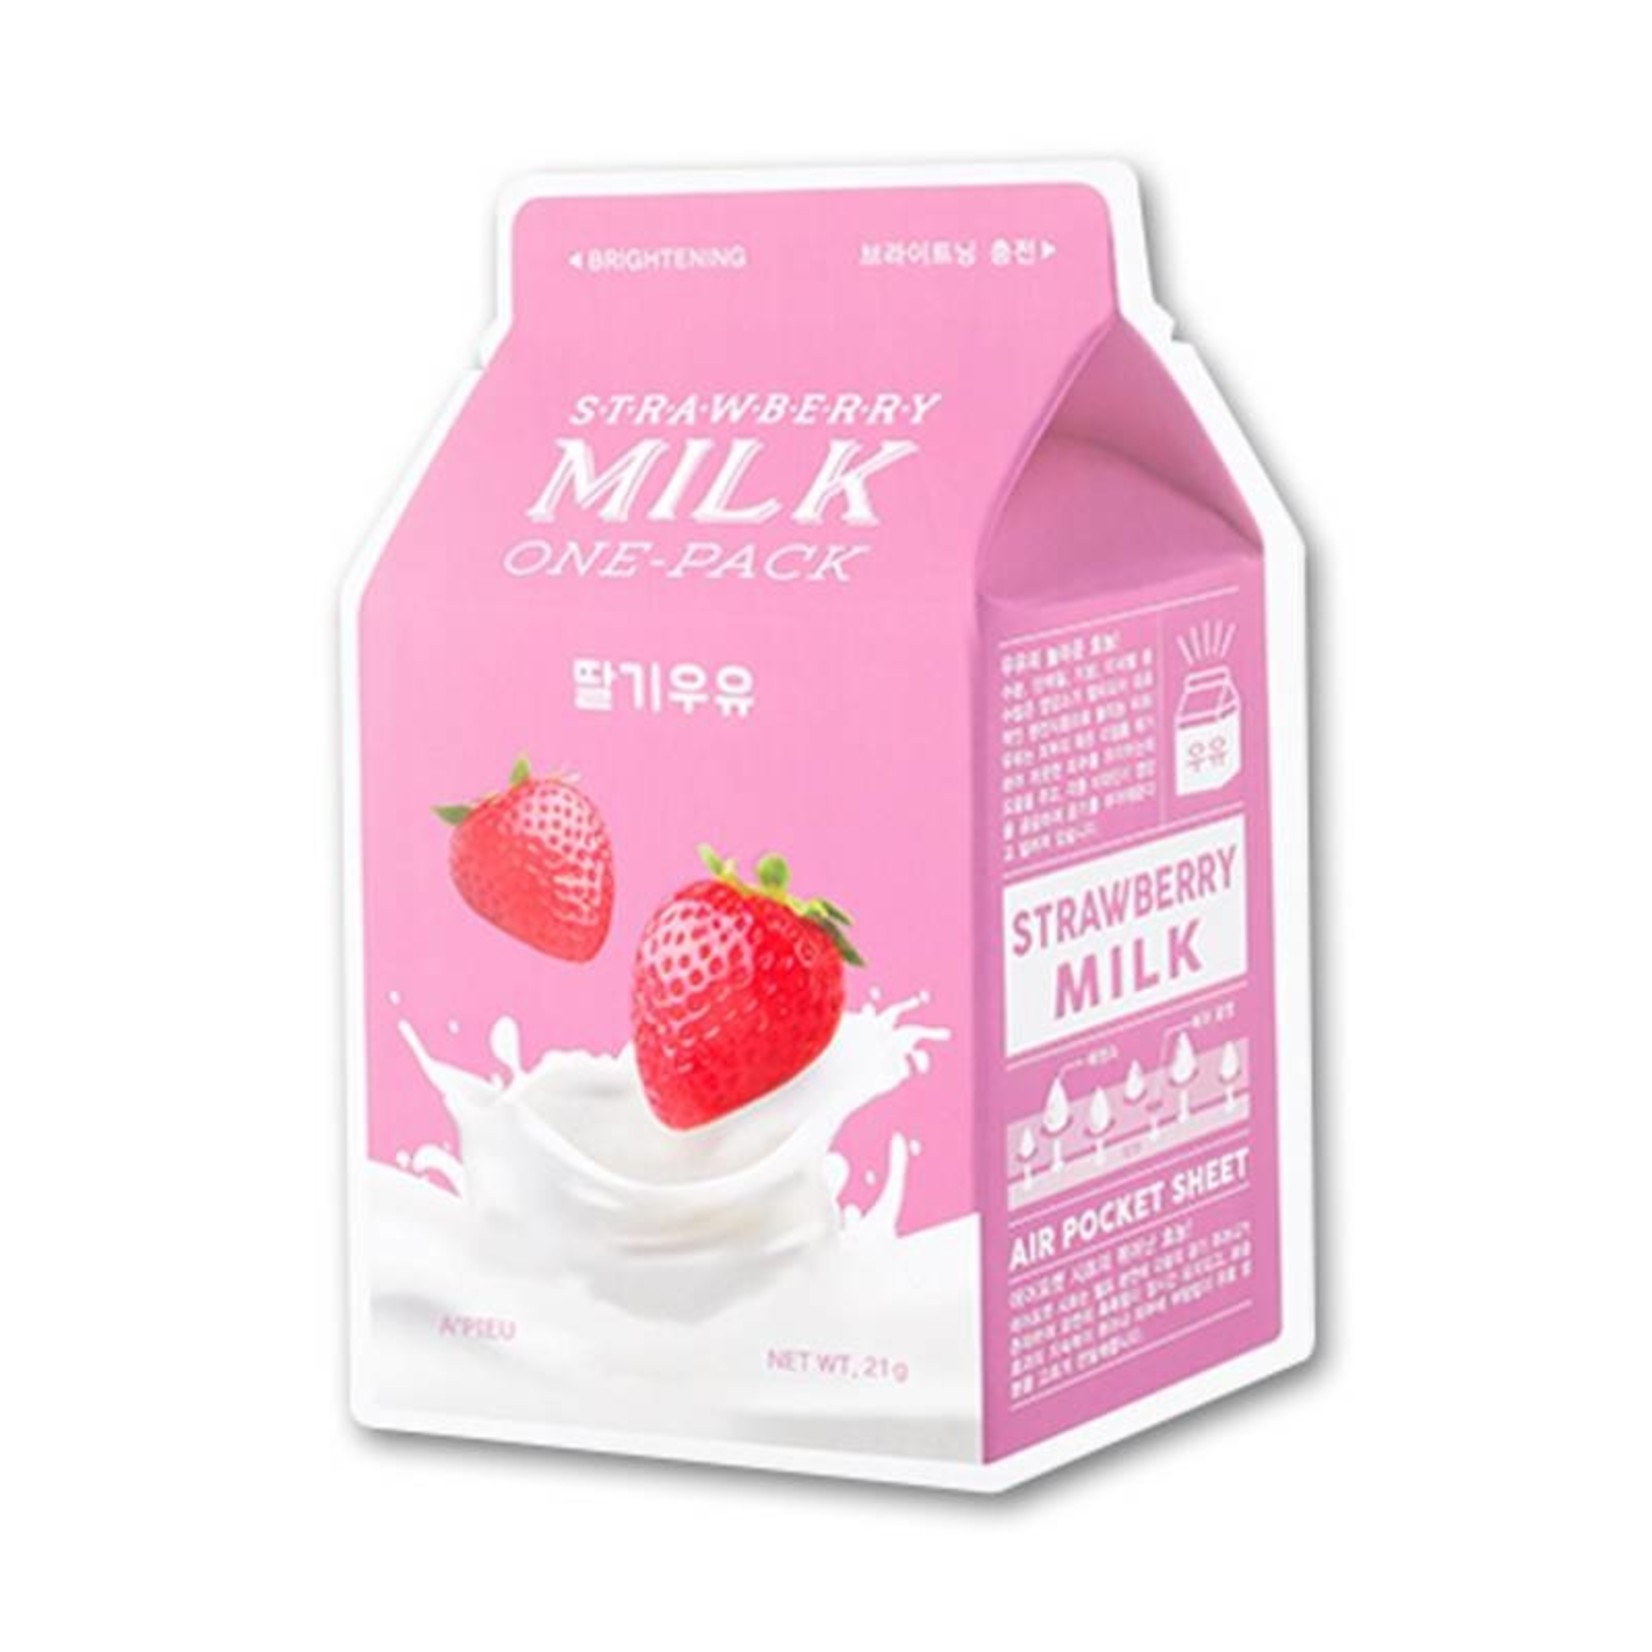 A'pieu Strawberry Milk One Pack Mask 10 pcs